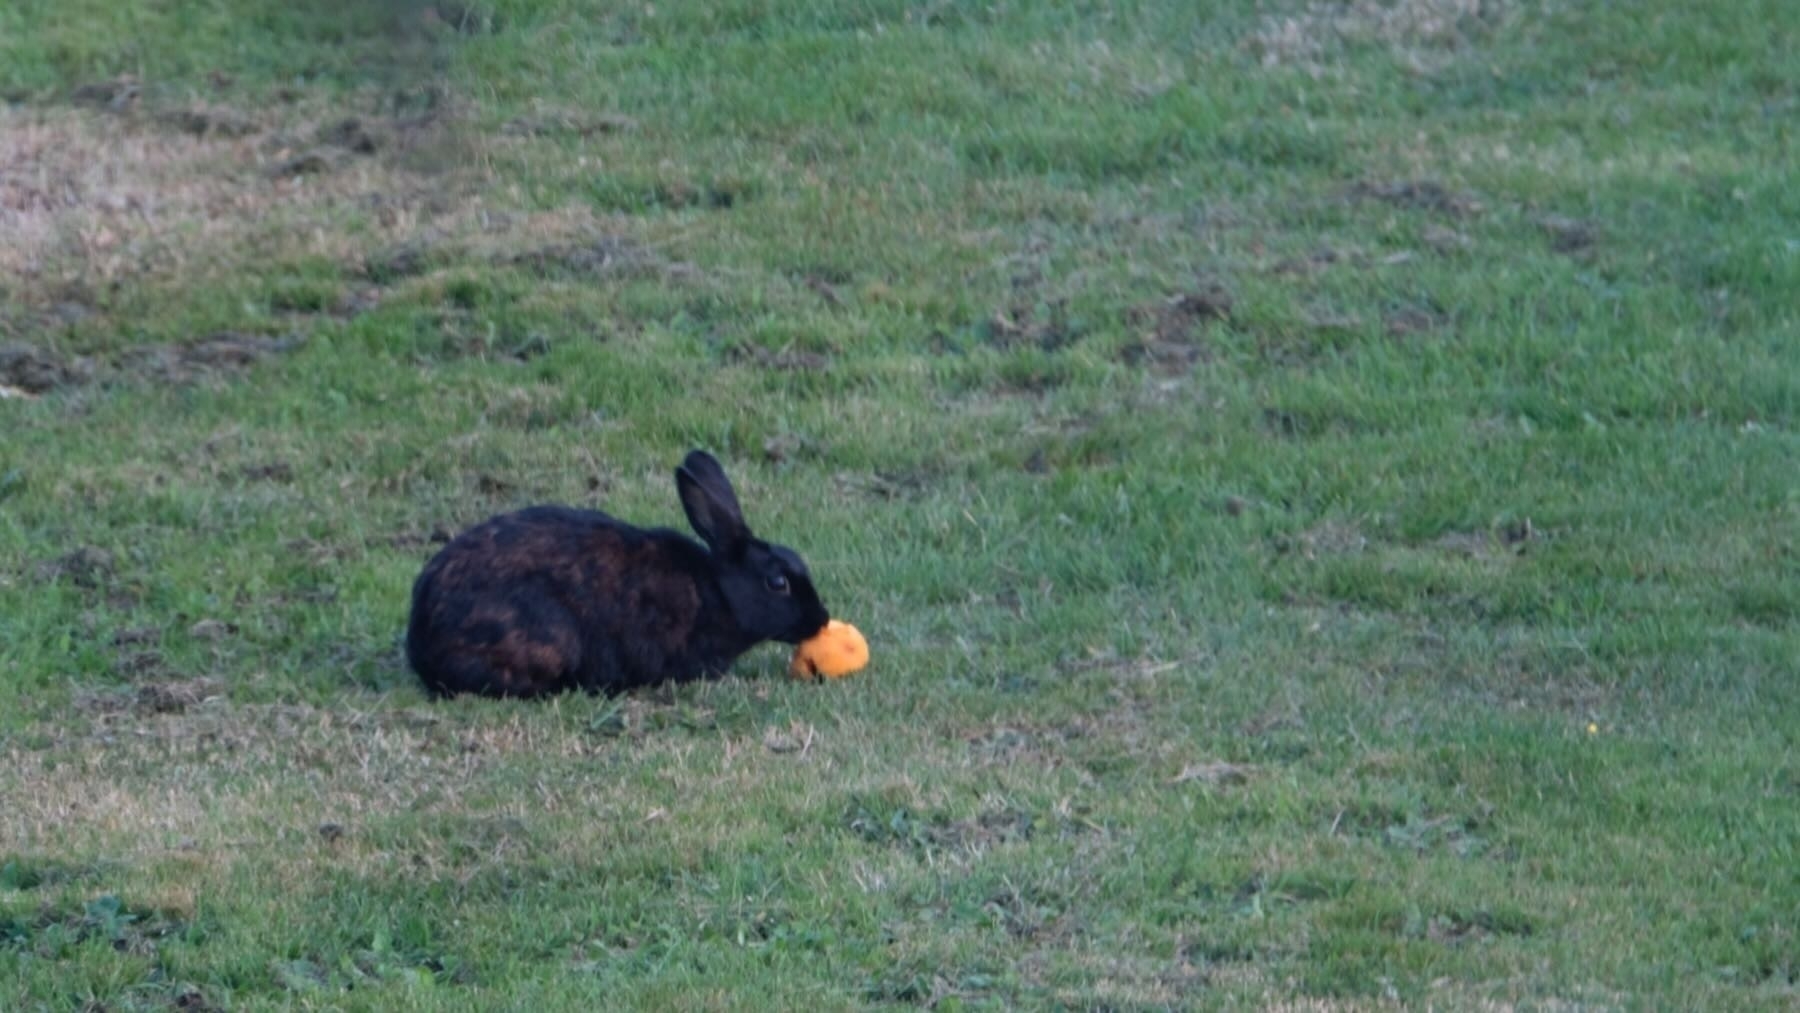 Wild black rabbit on grass eating a peach. 